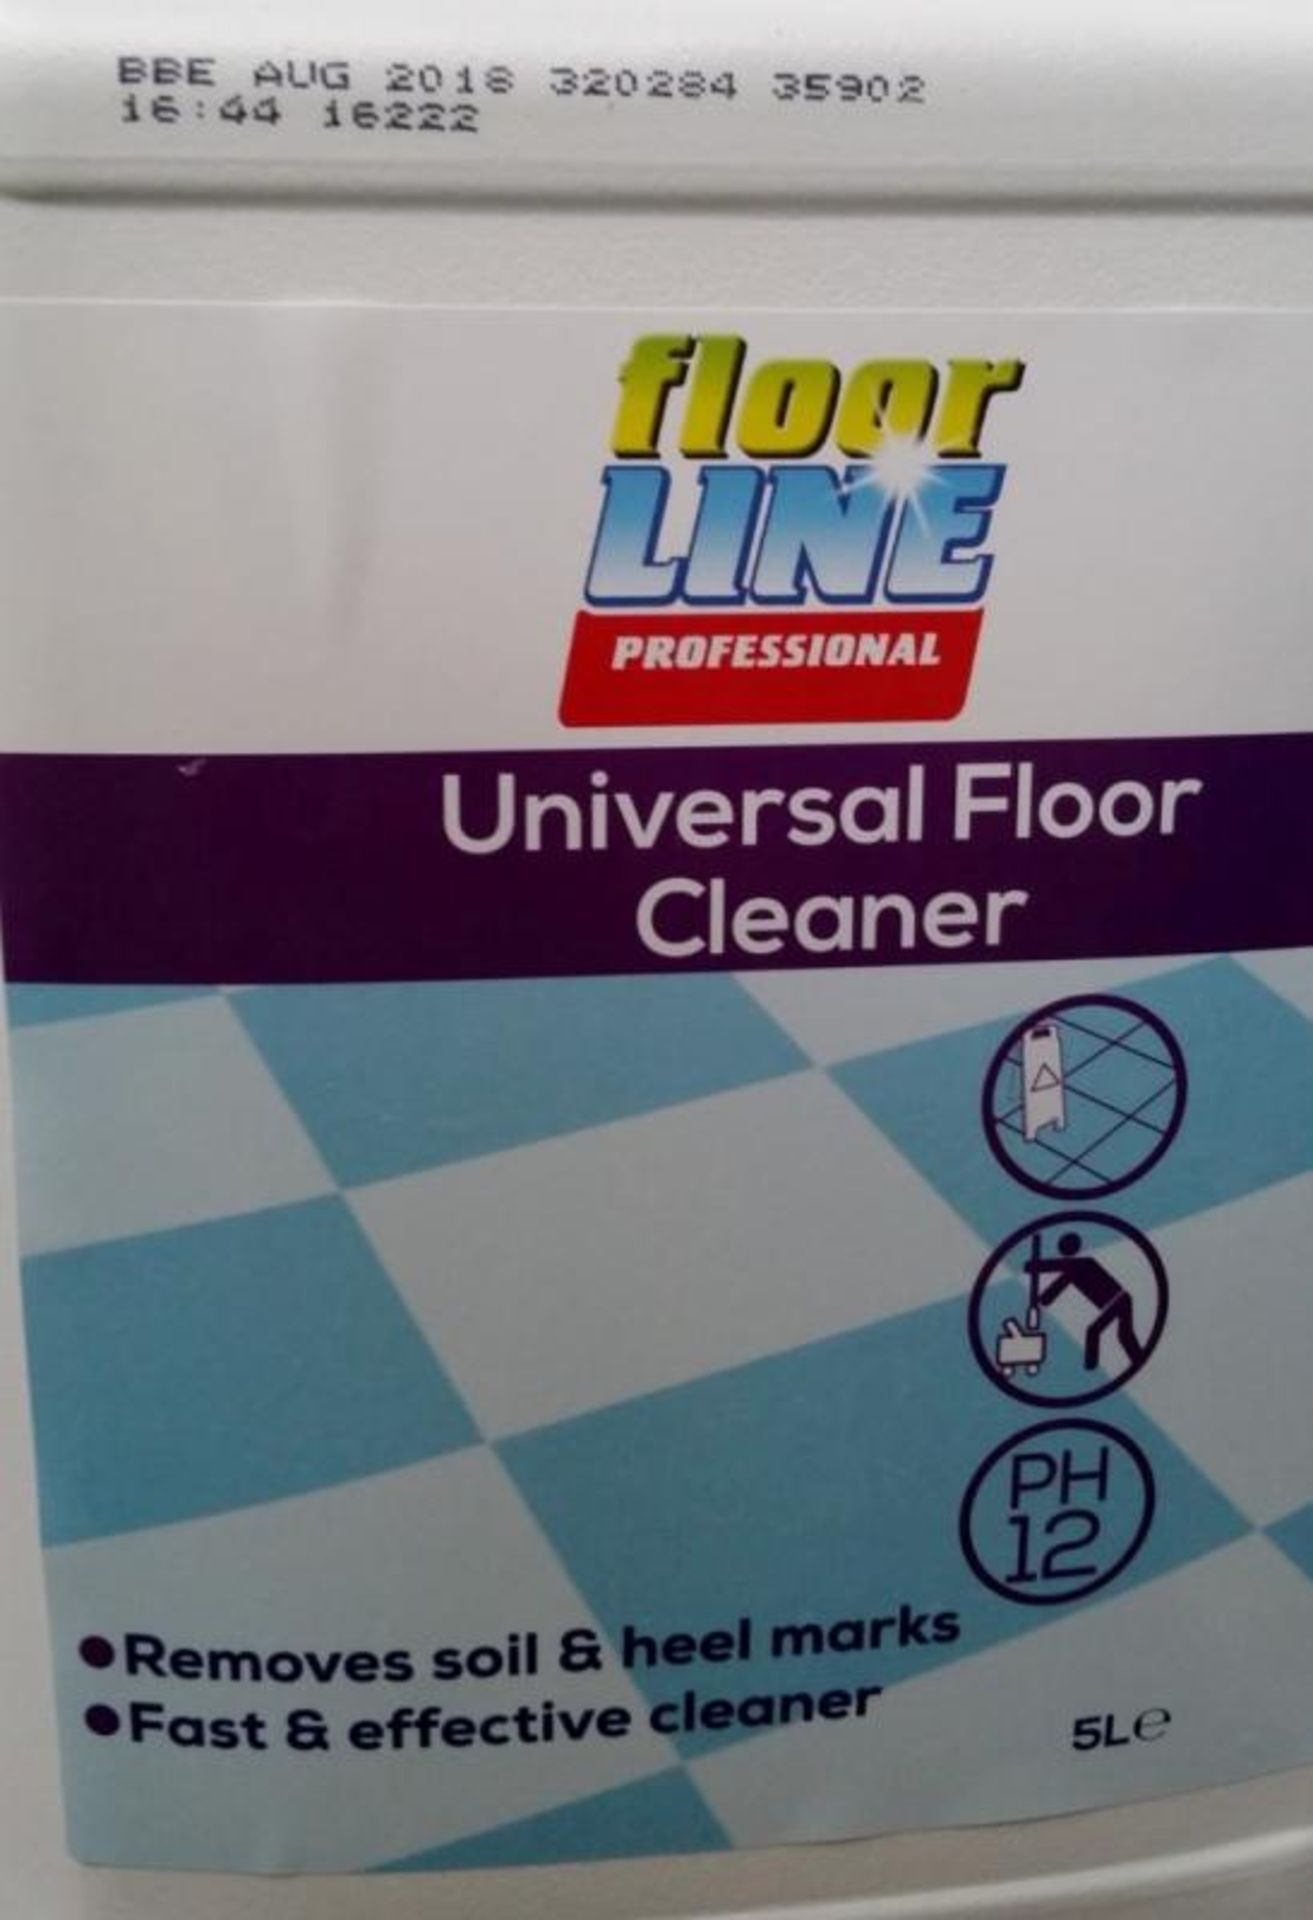 12 x Floor Line Professional 5 Litre Universal Floor Cleaner - Removes Soil & Heel Marks - Fast & - Image 2 of 5